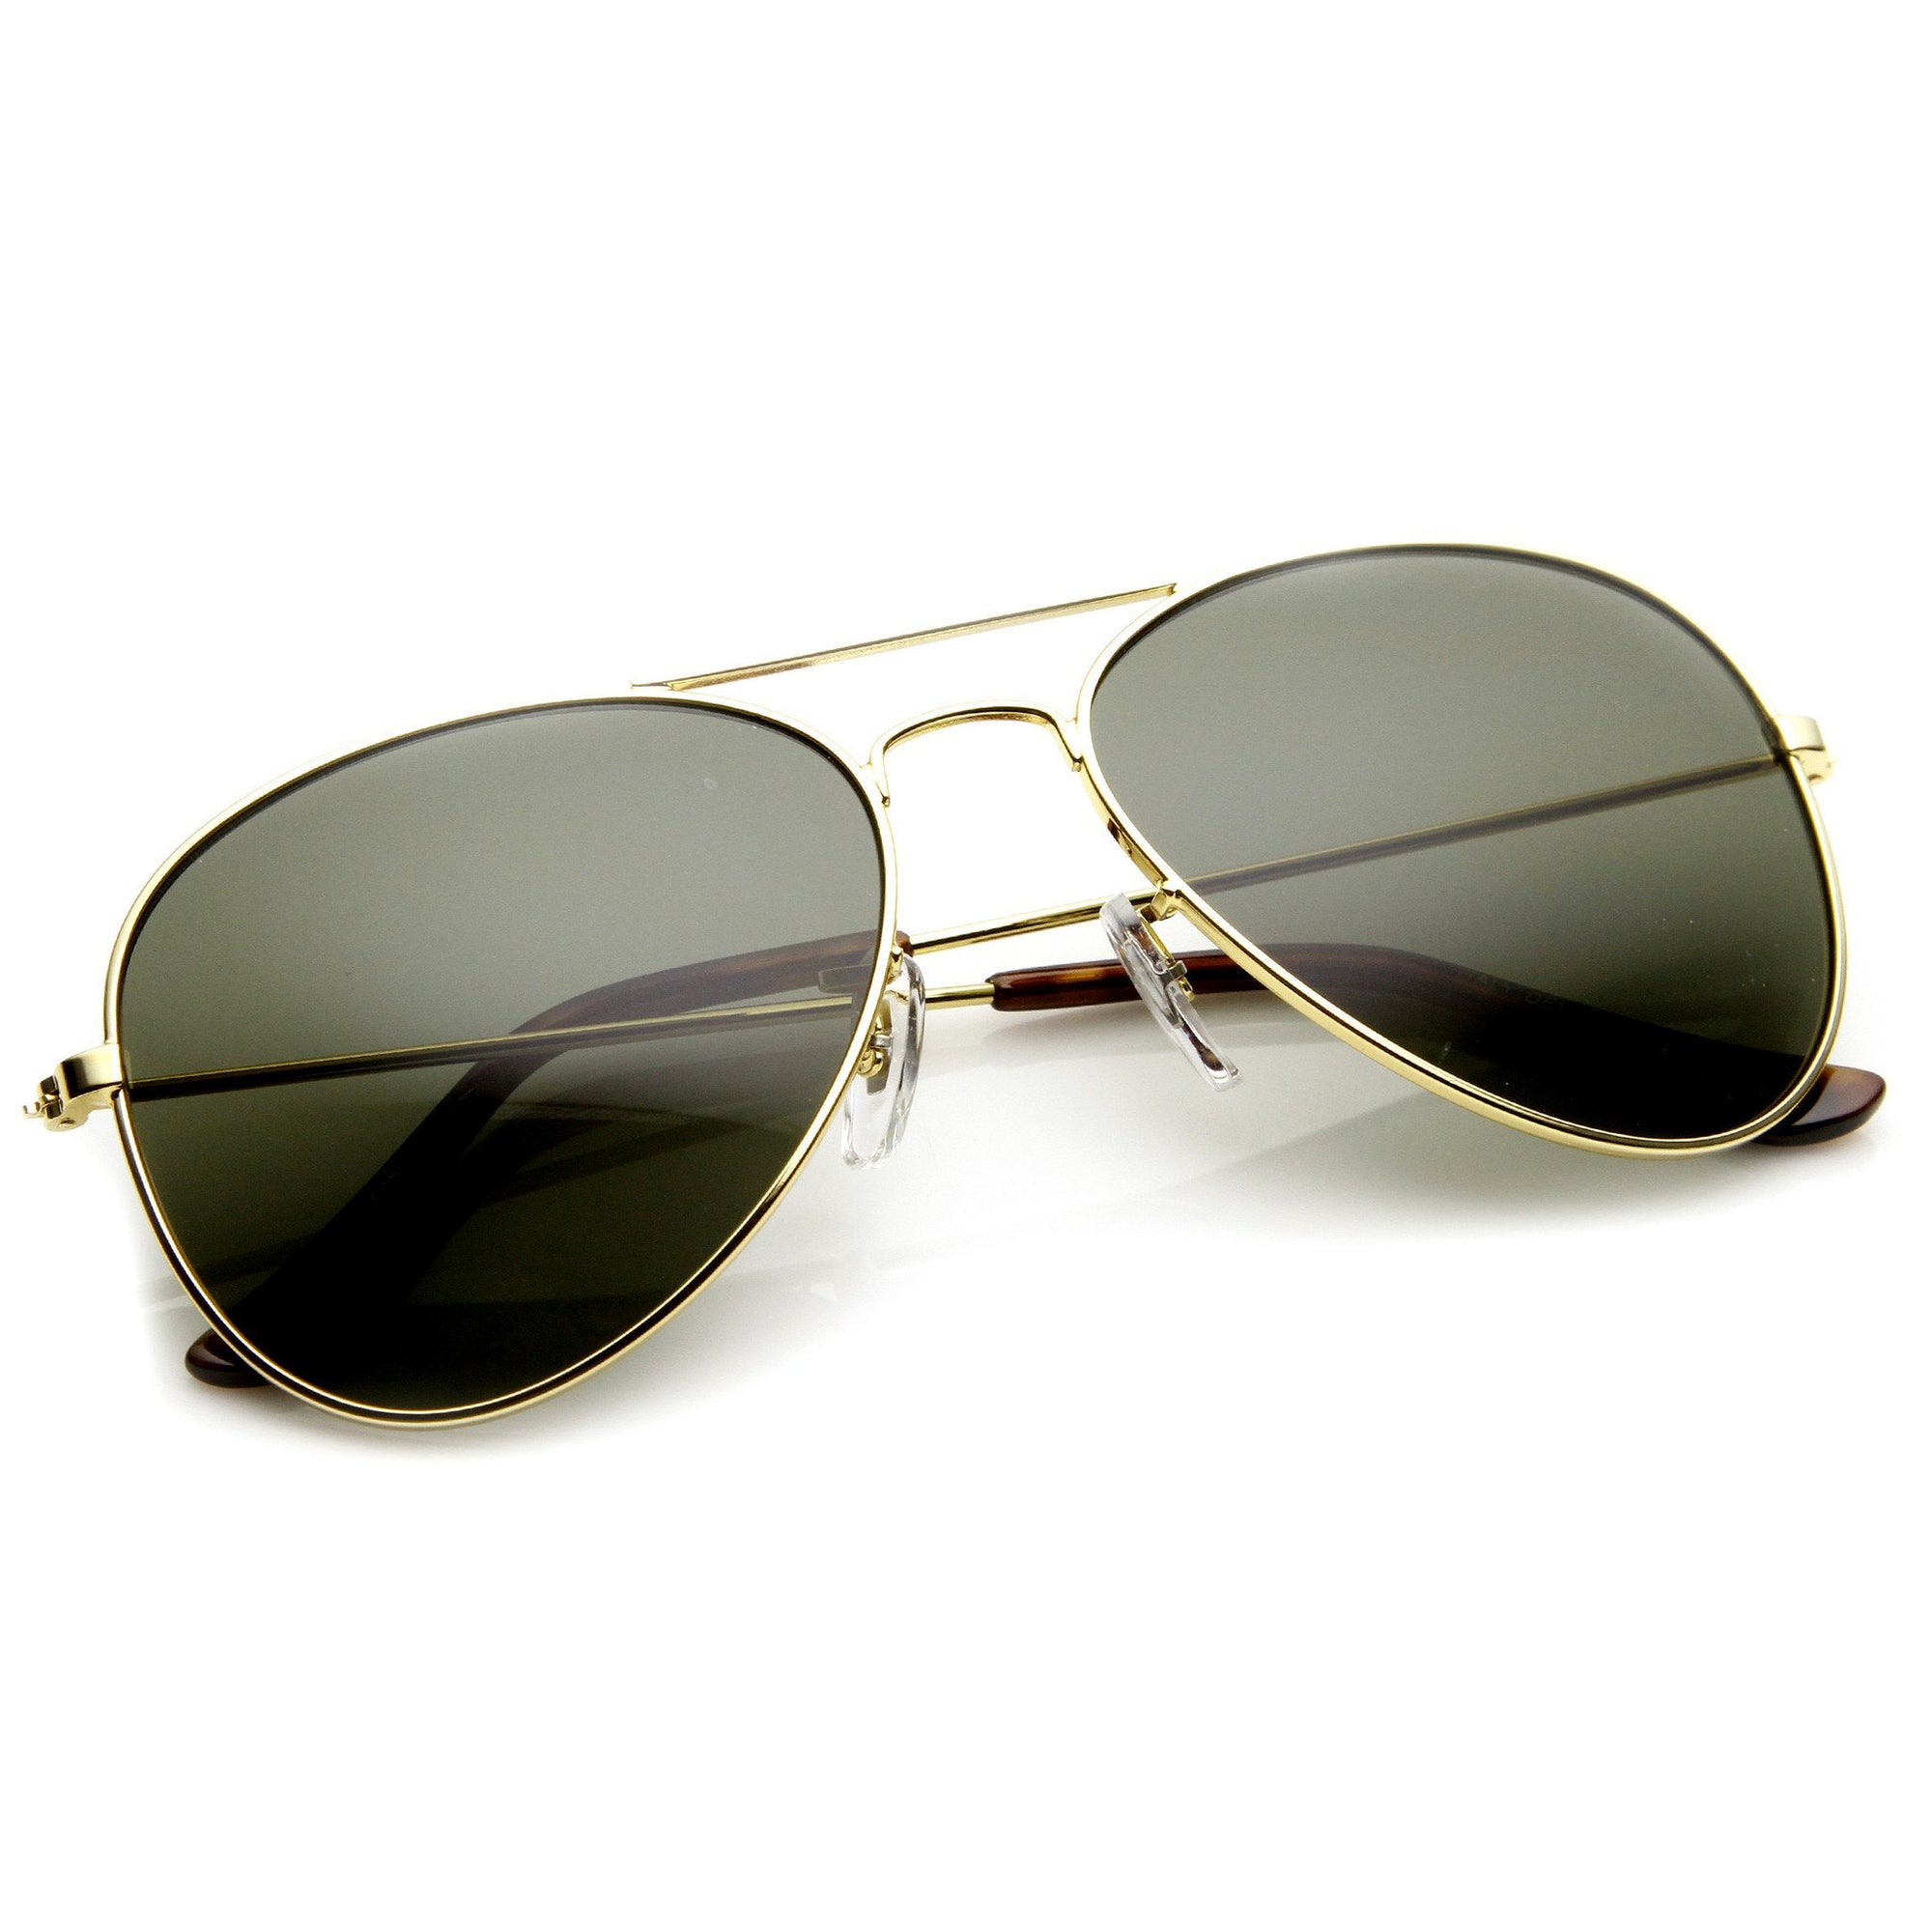 Vintage Aviator Sunglasses Japan | eBay